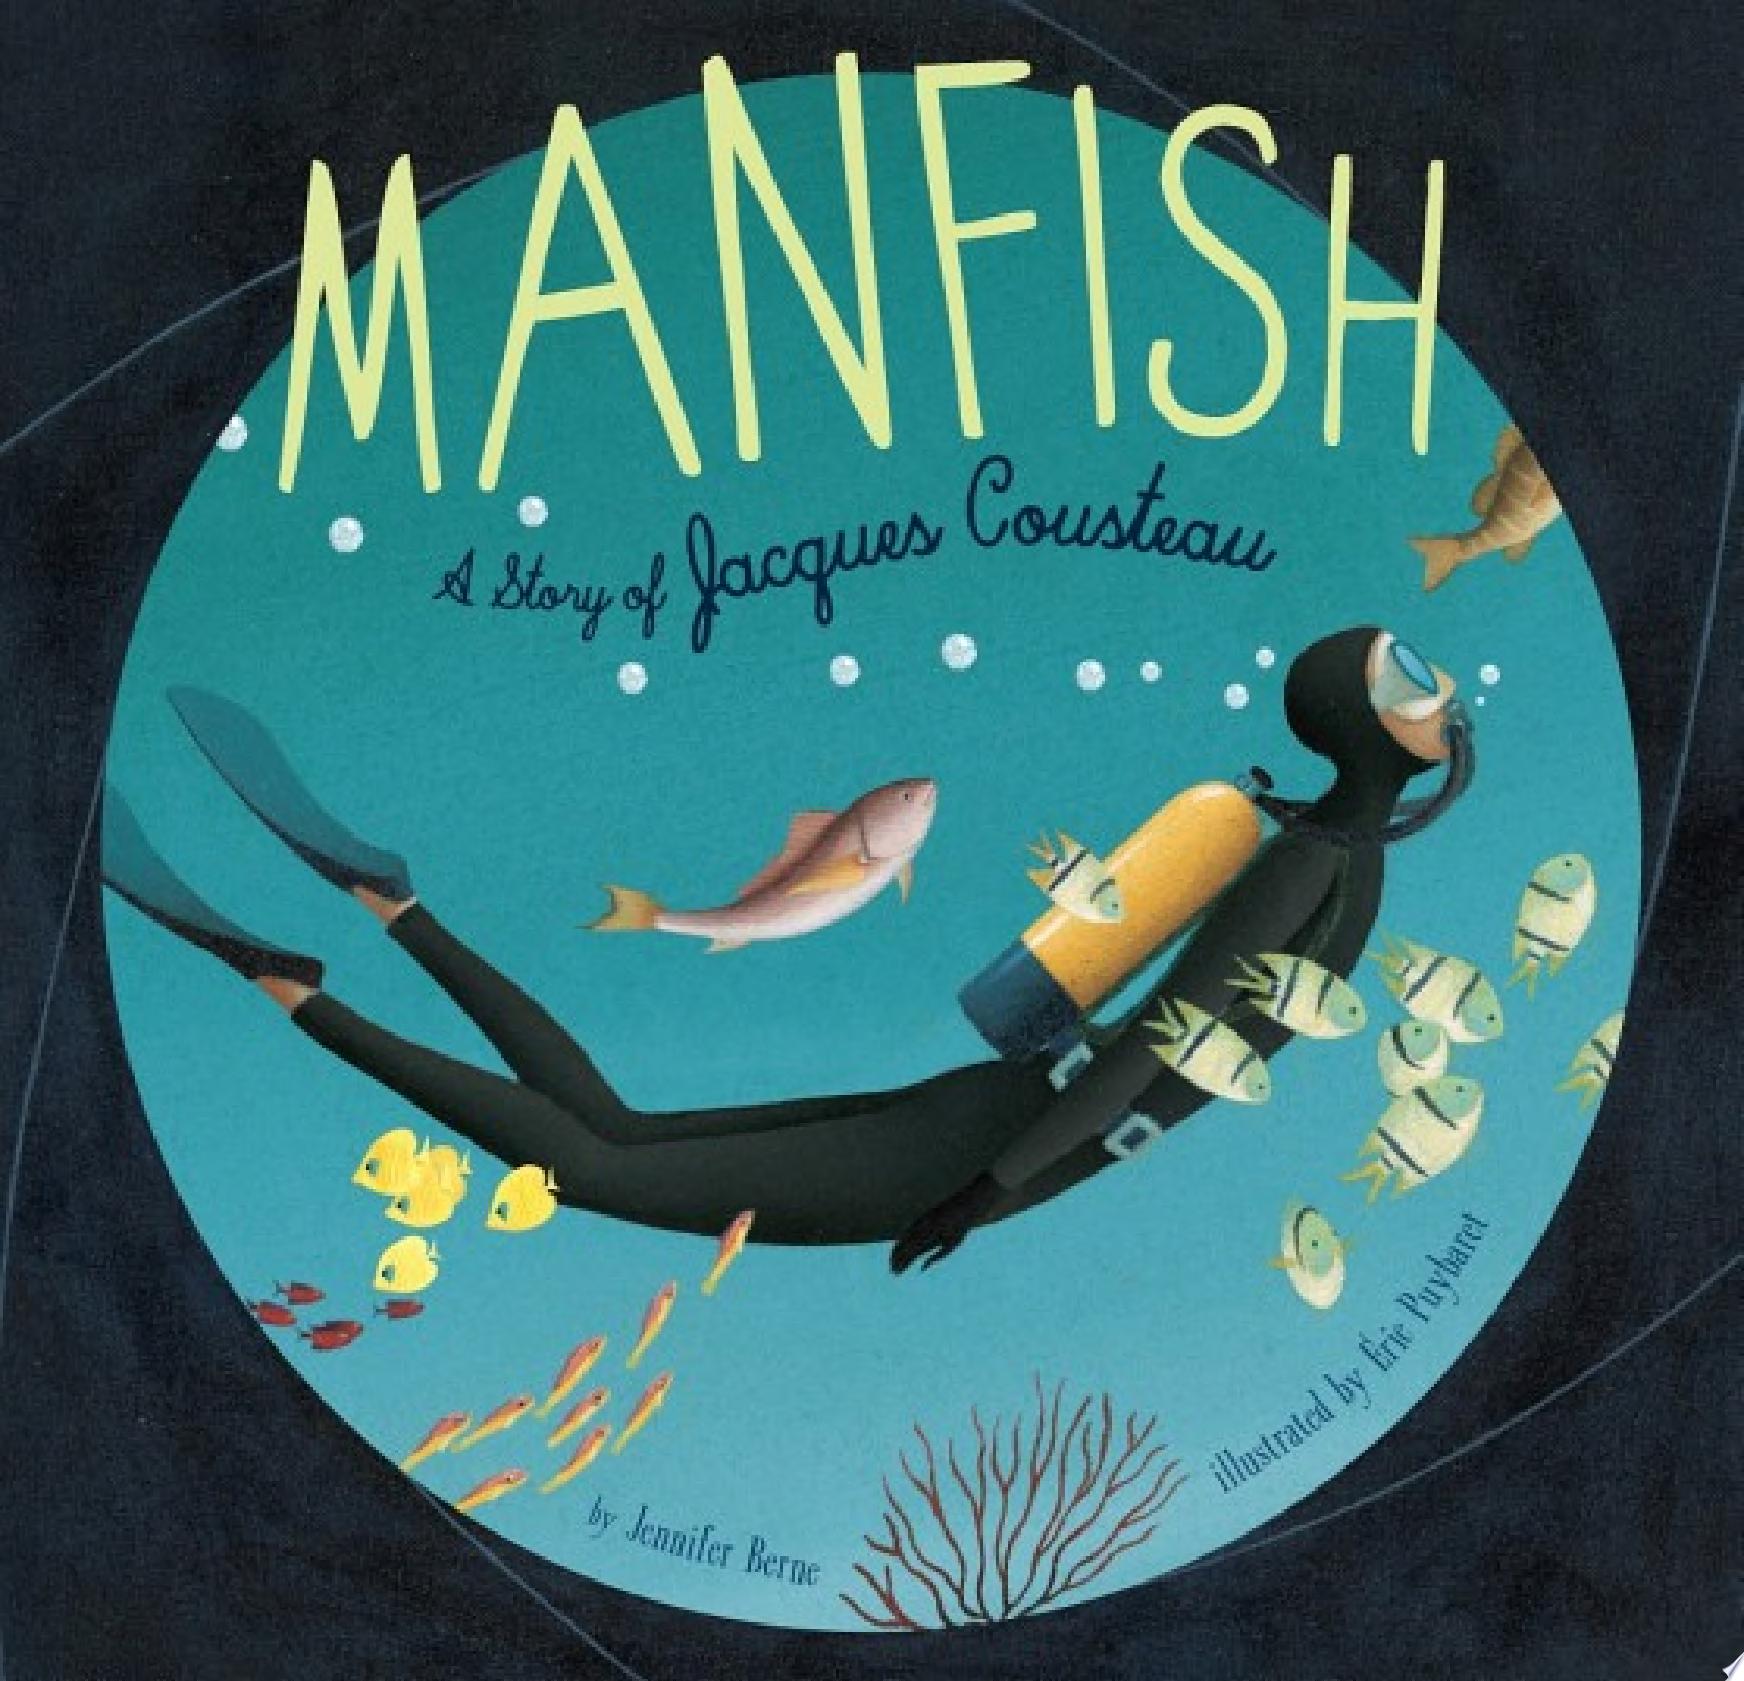 Image for "Manfish"